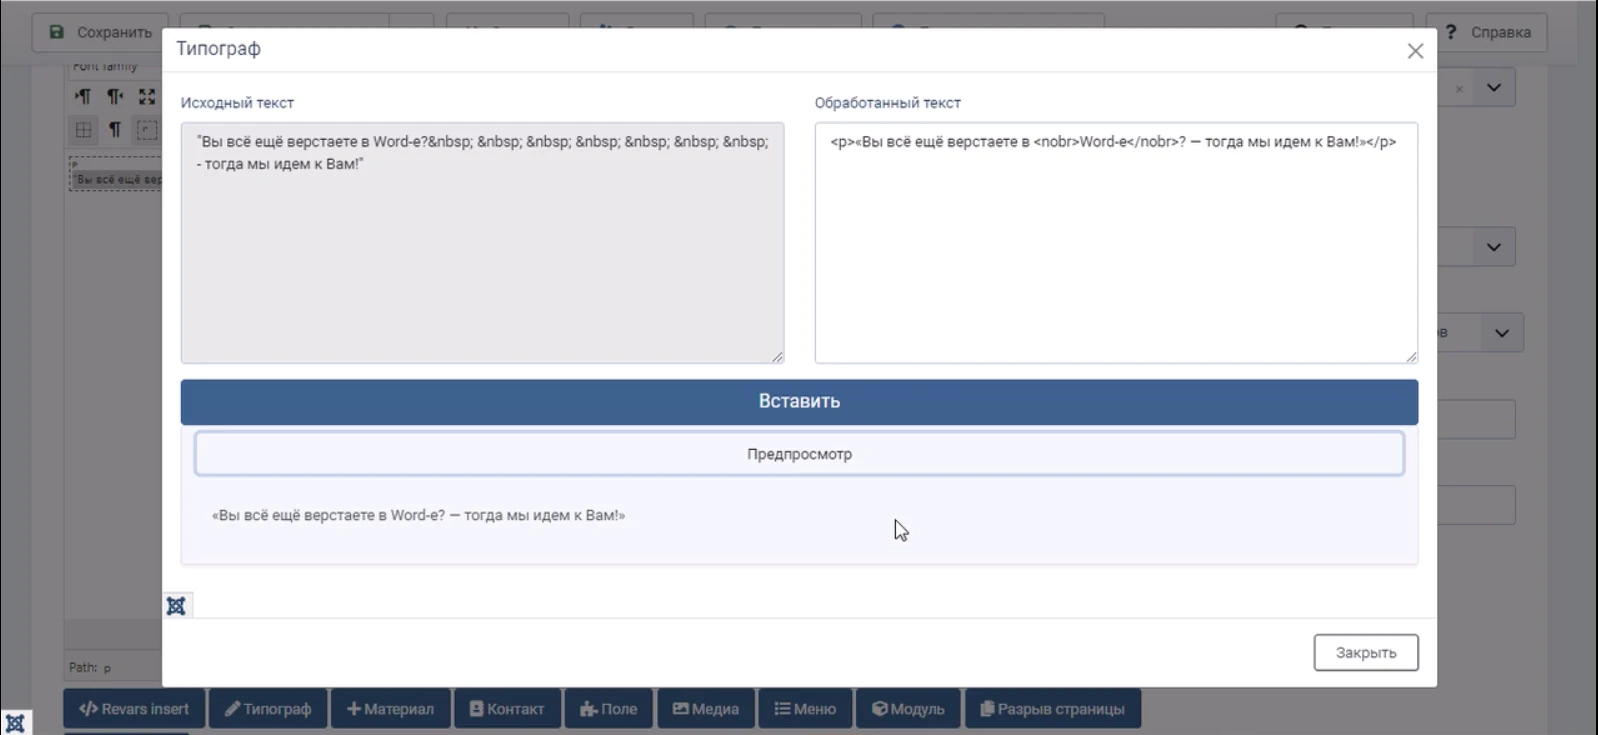 Скриншот модального окна плагина типографа для Joomla 4